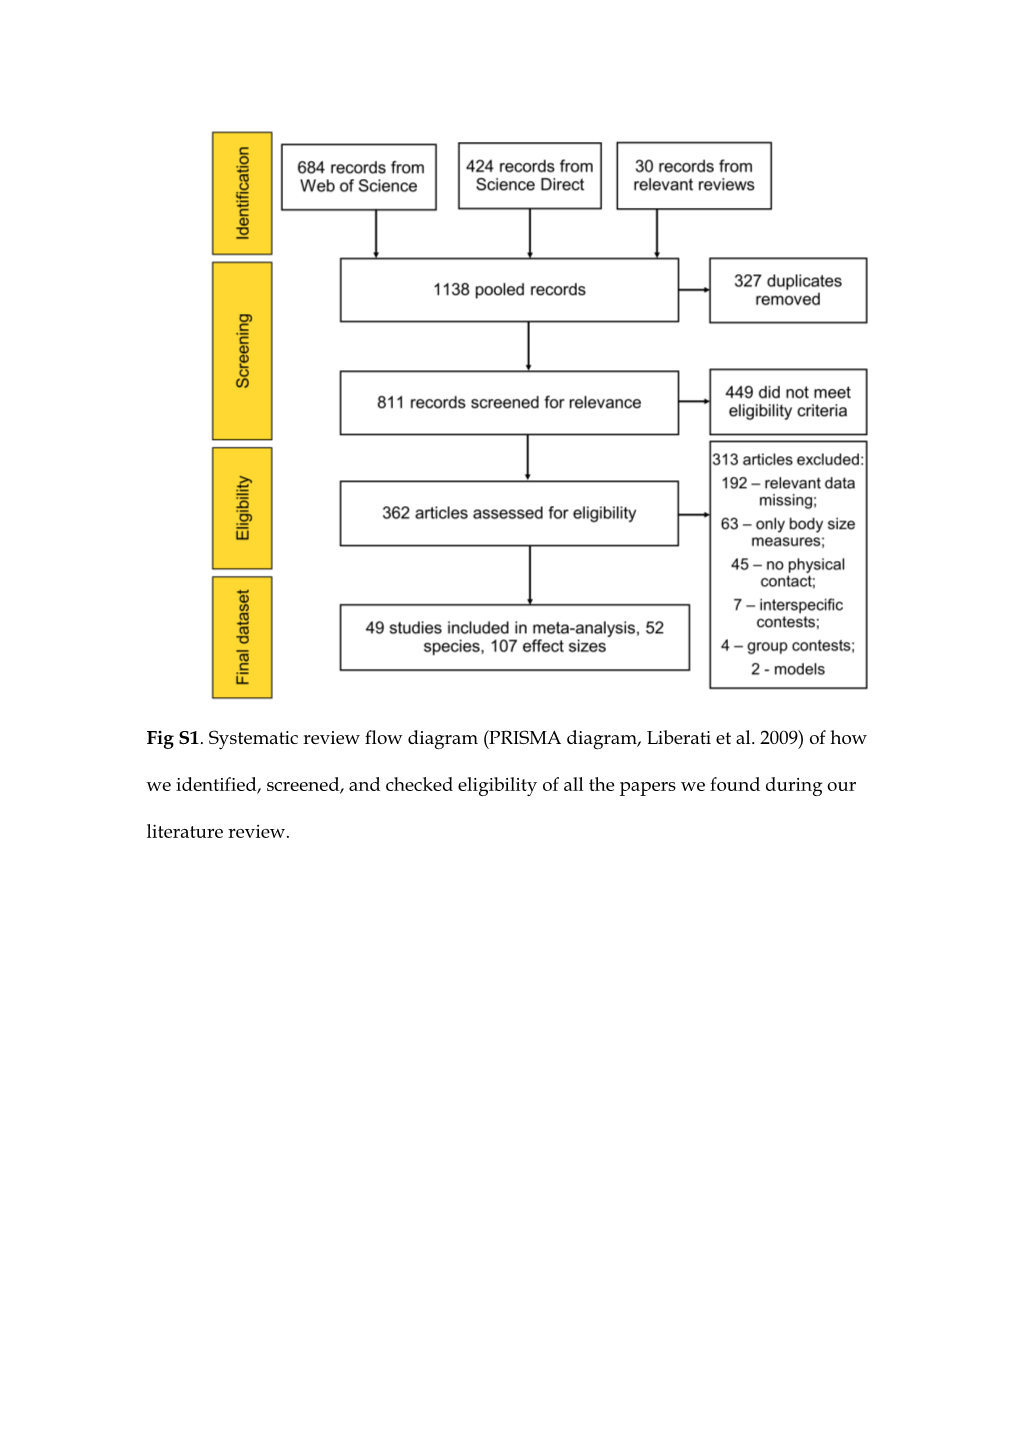 Fig S1. Systematic Review Flow Diagram (PRISMA Diagram, Liberati Et Al